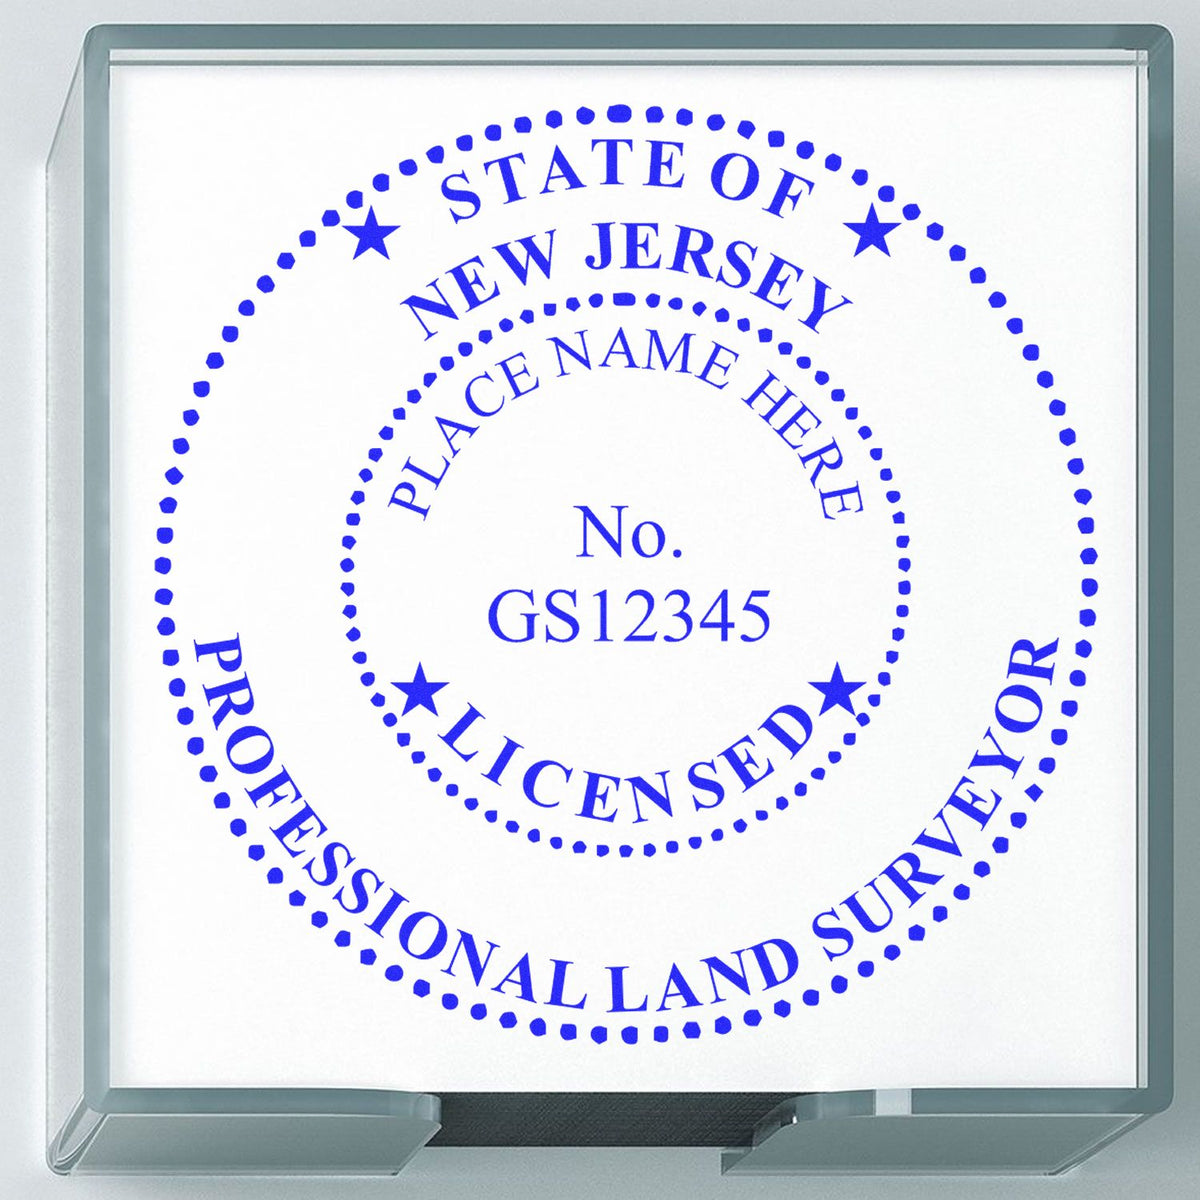 New Jersey Land Surveyor Seal Stamp In Use Photo